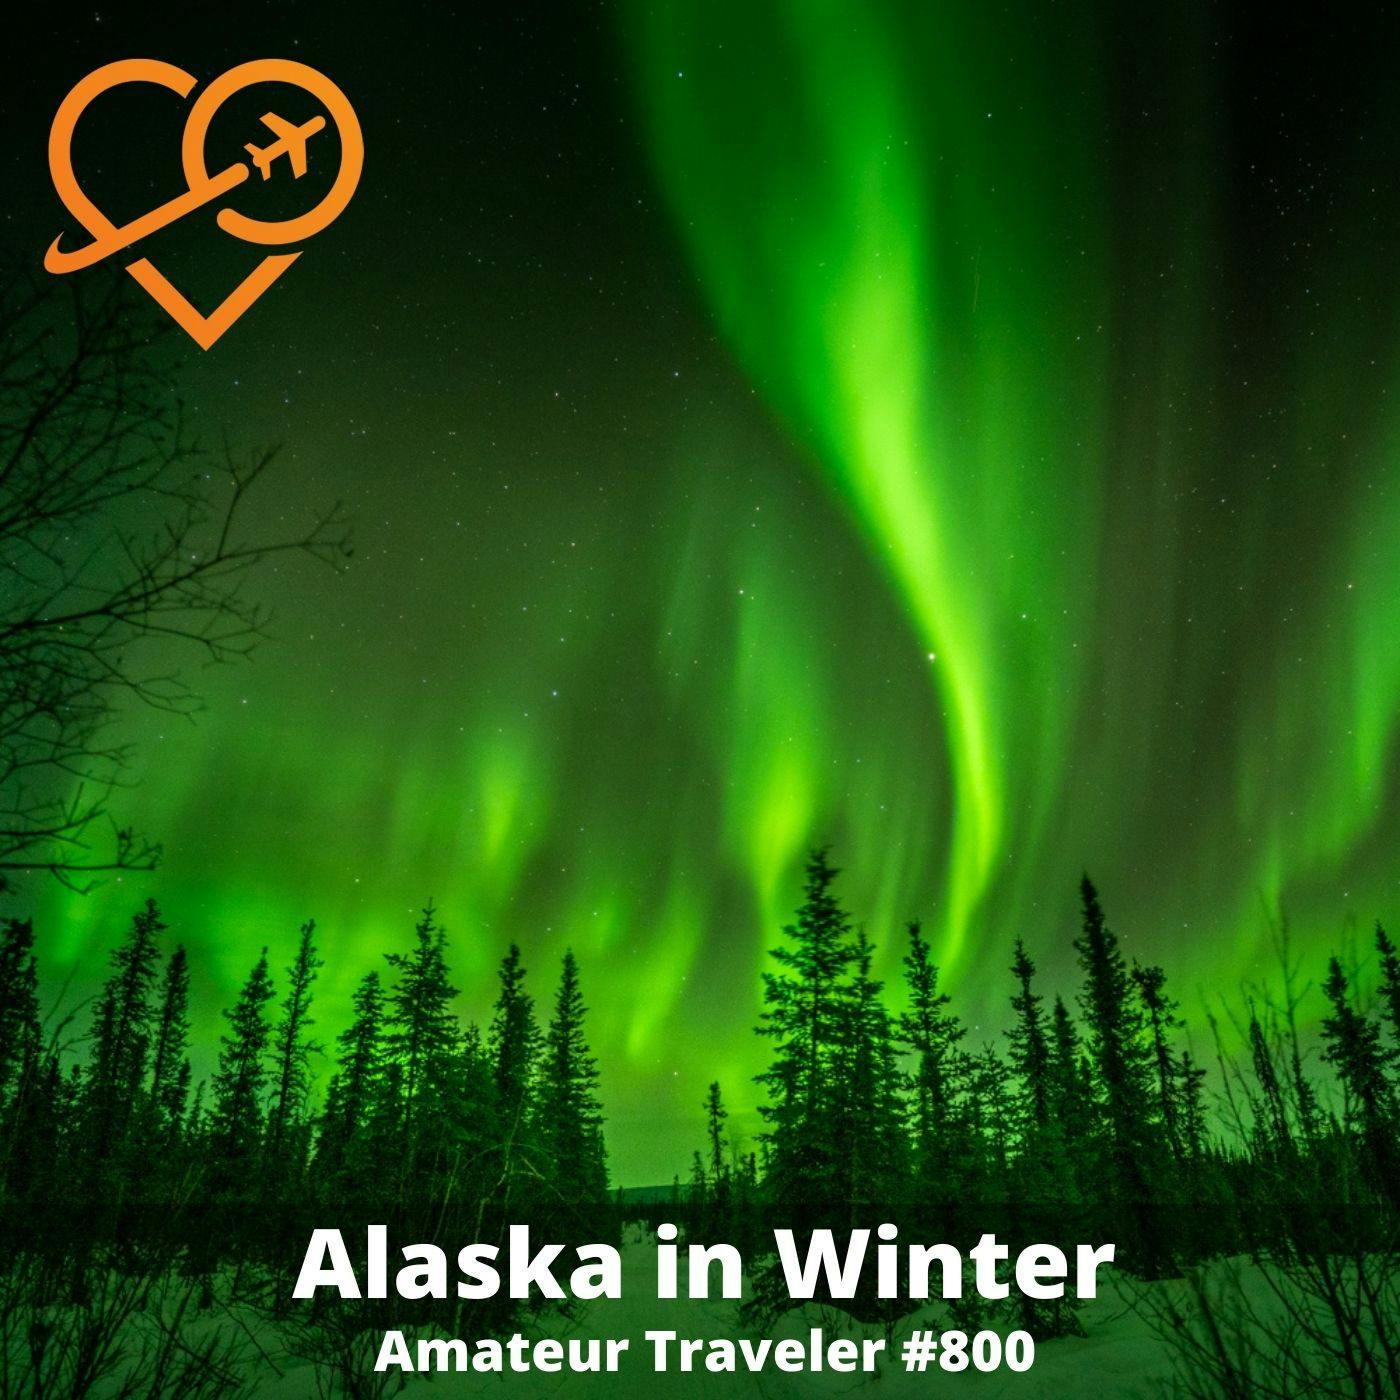 AT#800 - Travel to Alaska in Winter